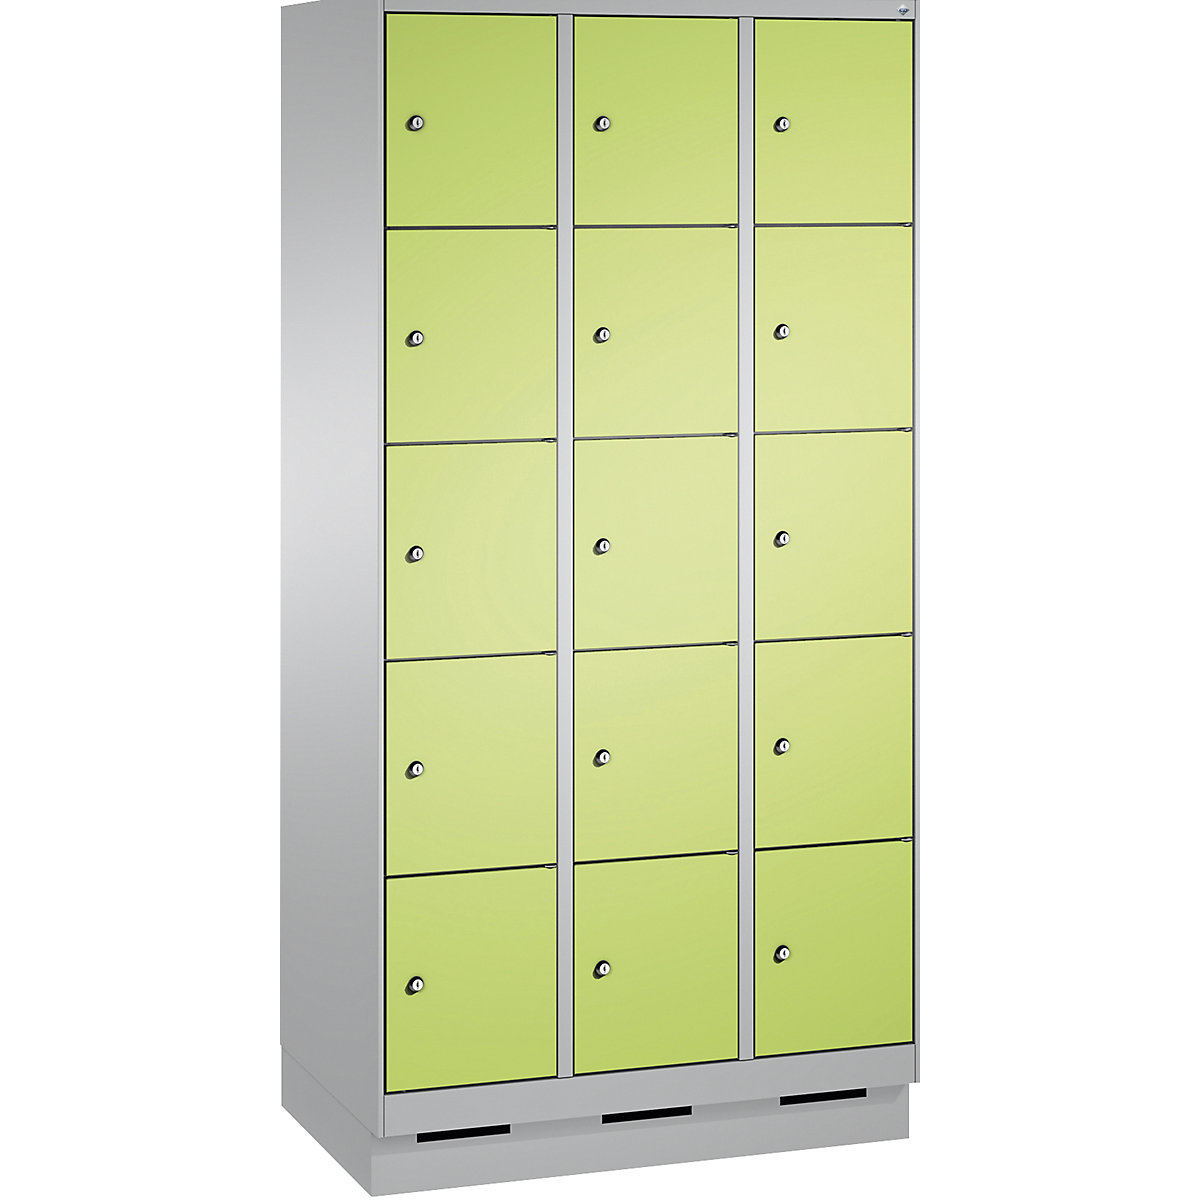 EVOLO locker unit, with plinth – C+P, 3 compartments, 5 shelf compartments each, compartment width 300 mm, white aluminium / viridian green